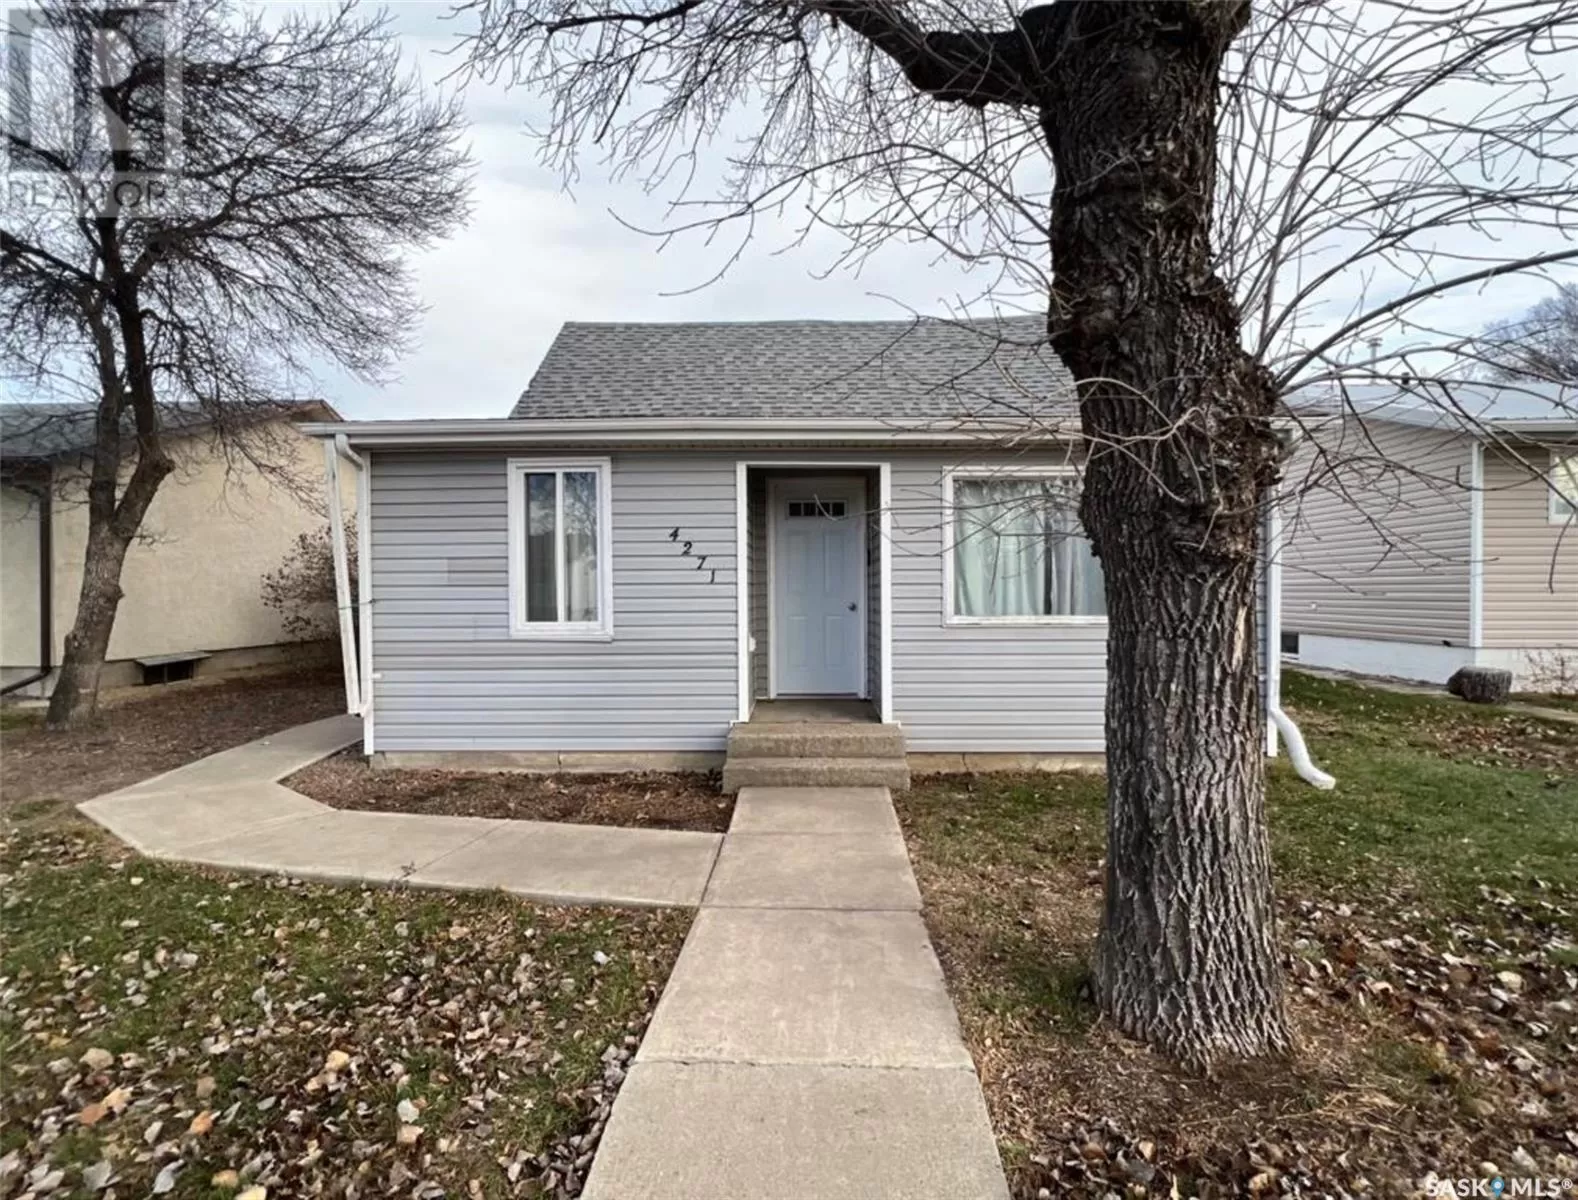 House for rent: 4271 Price Avenue, Gull Lake, Saskatchewan S0N 1A0